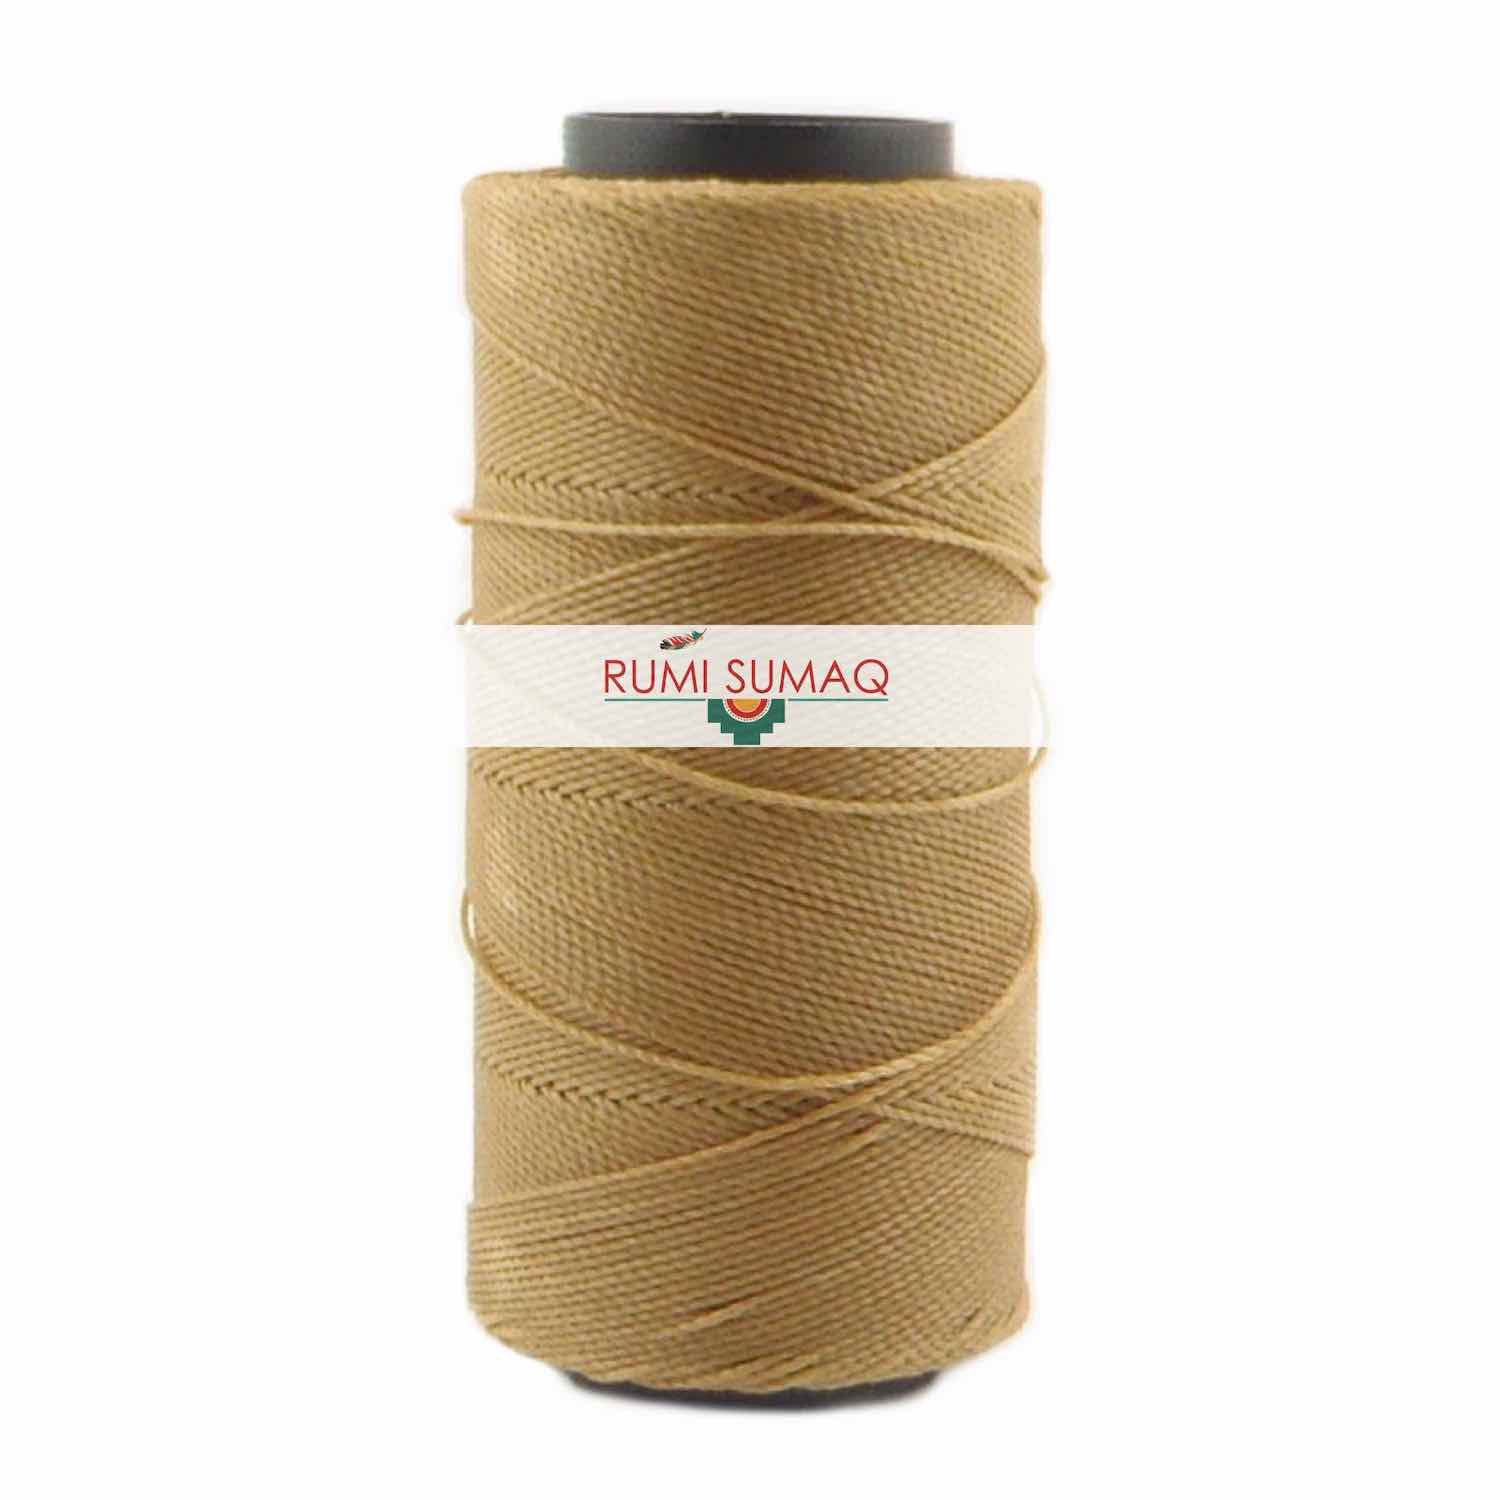 Settanyl 06-518 Cashew Waxed Polyester Cord 1mm | RUMI SUMAQ Setta Encerada Brazilian Waxed Cord